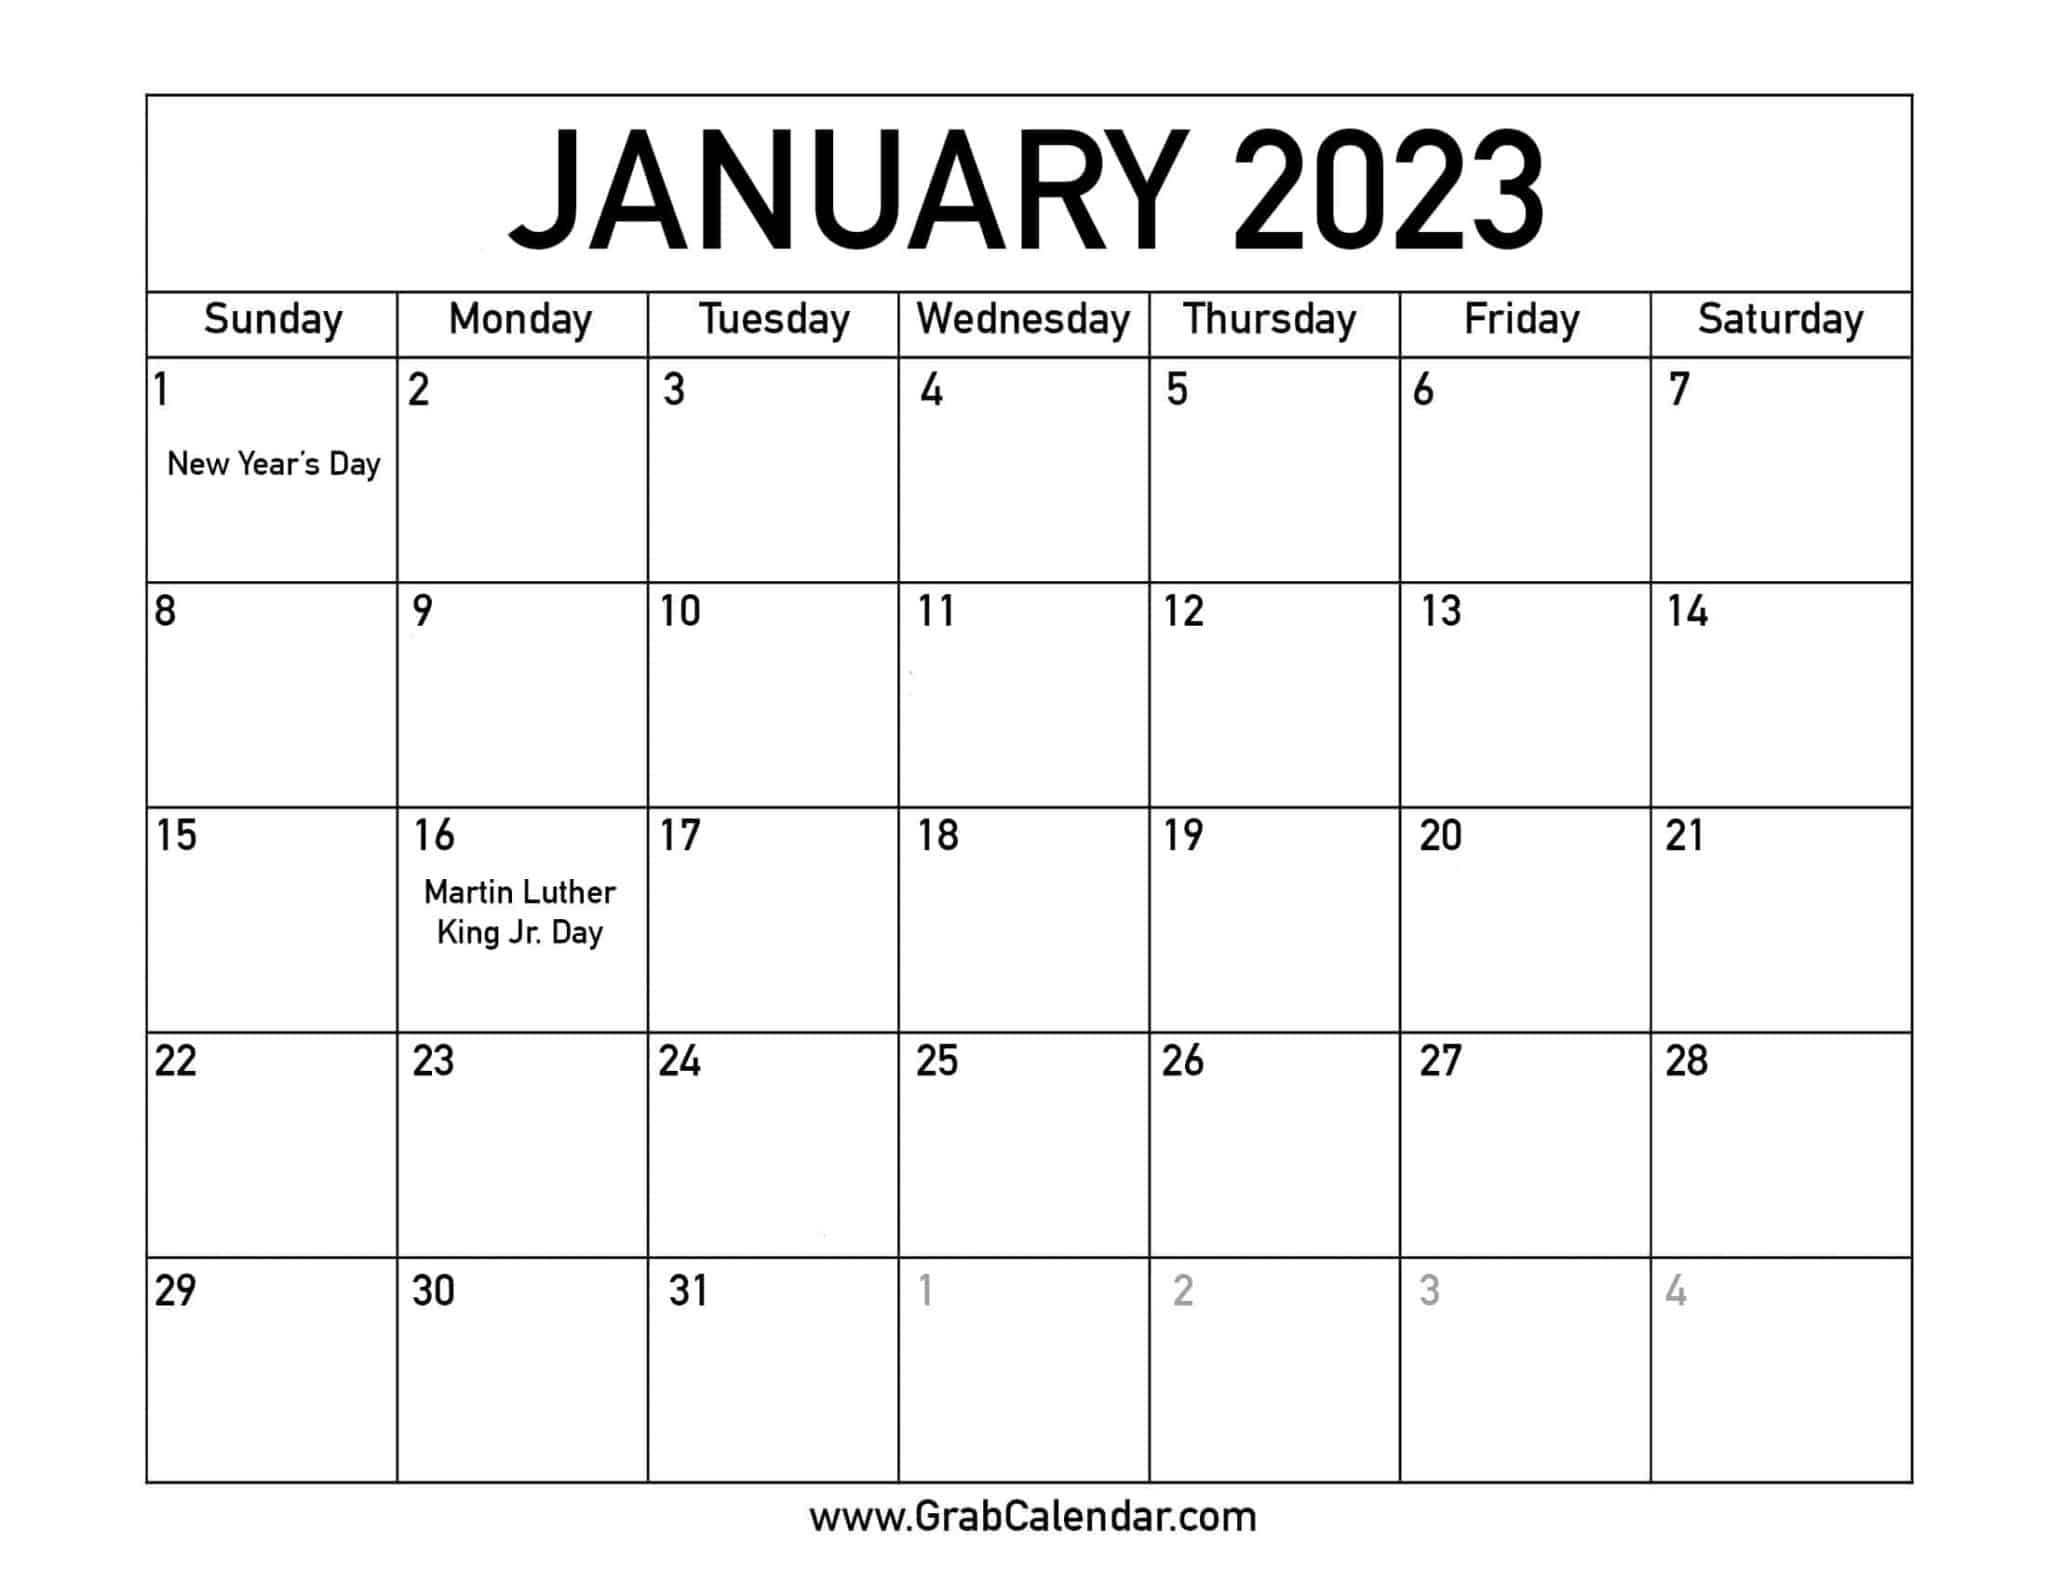 calendar-january-2023-turquoise-background-2232471095